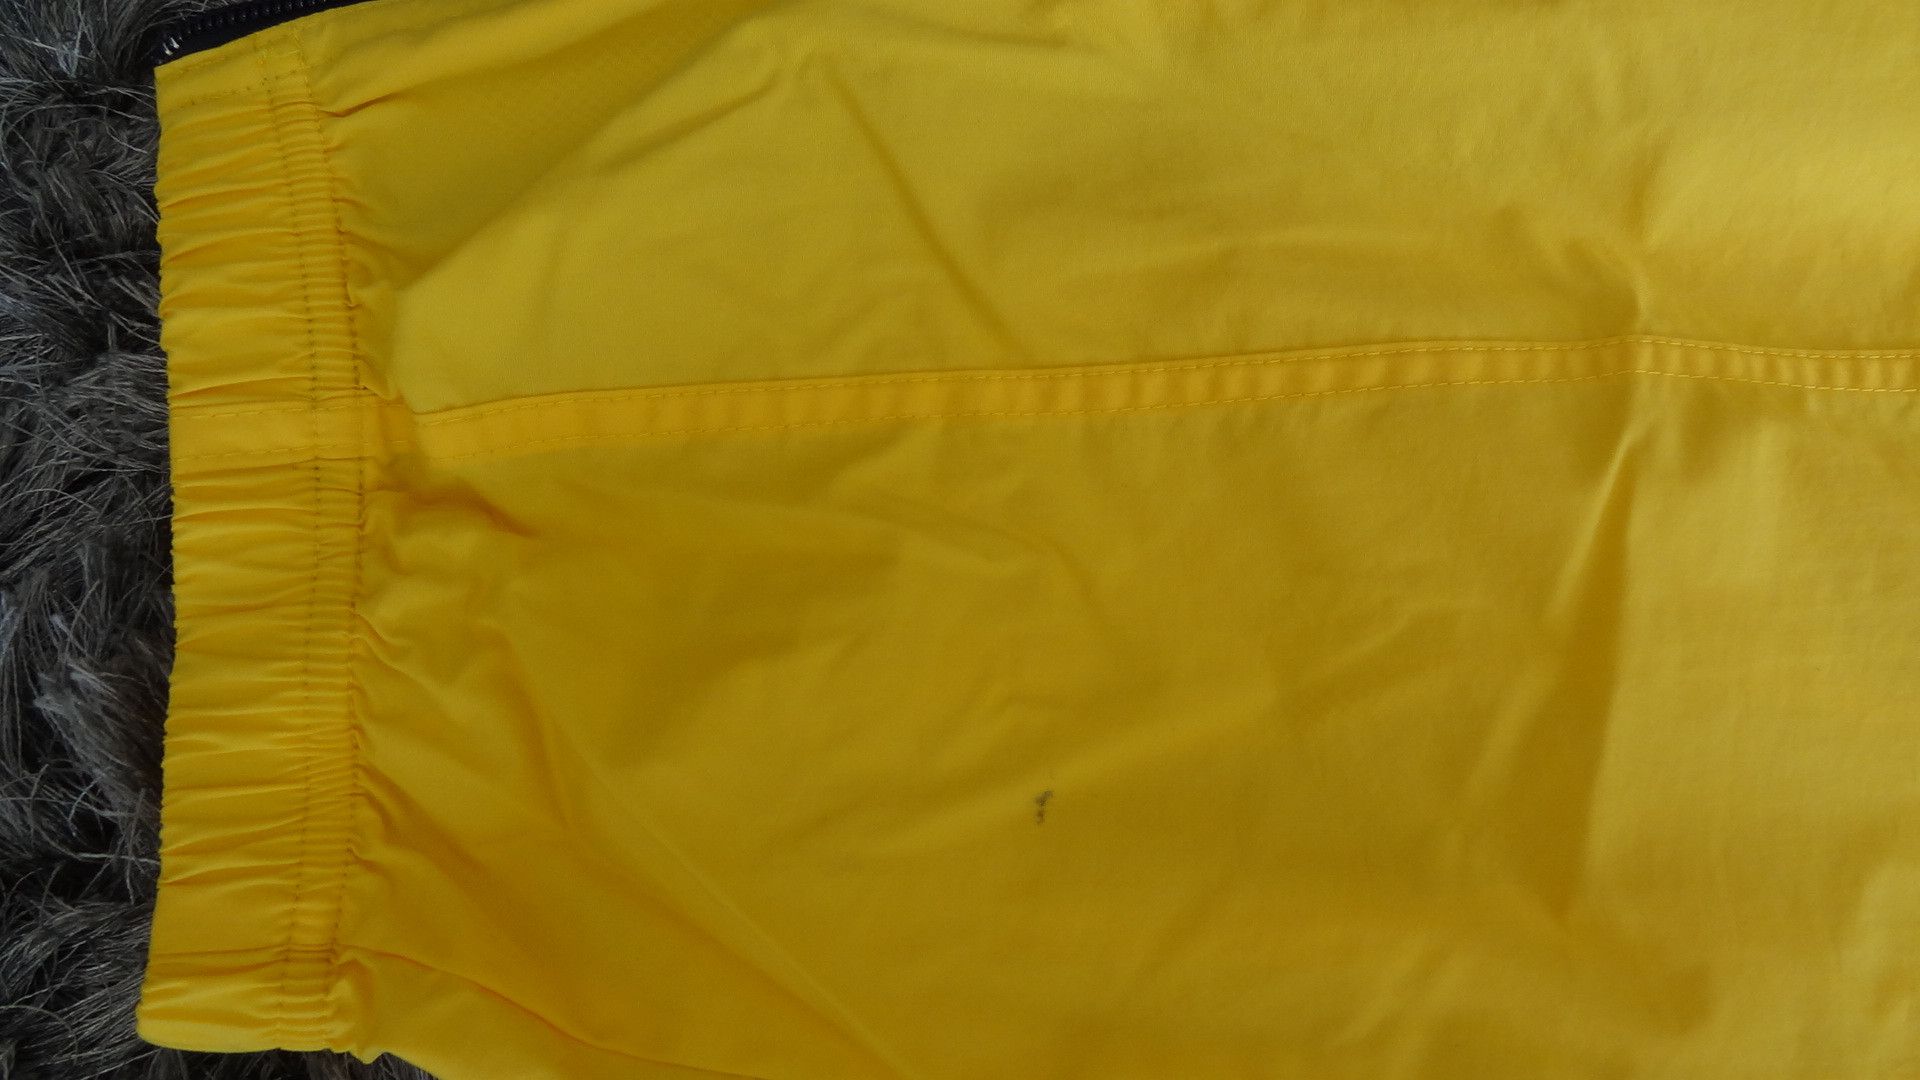 Polo Ralph Lauren Vintage 90s Yellow Polo Sport Track Pants Size M Size US 32 / EU 48 - 3 Thumbnail